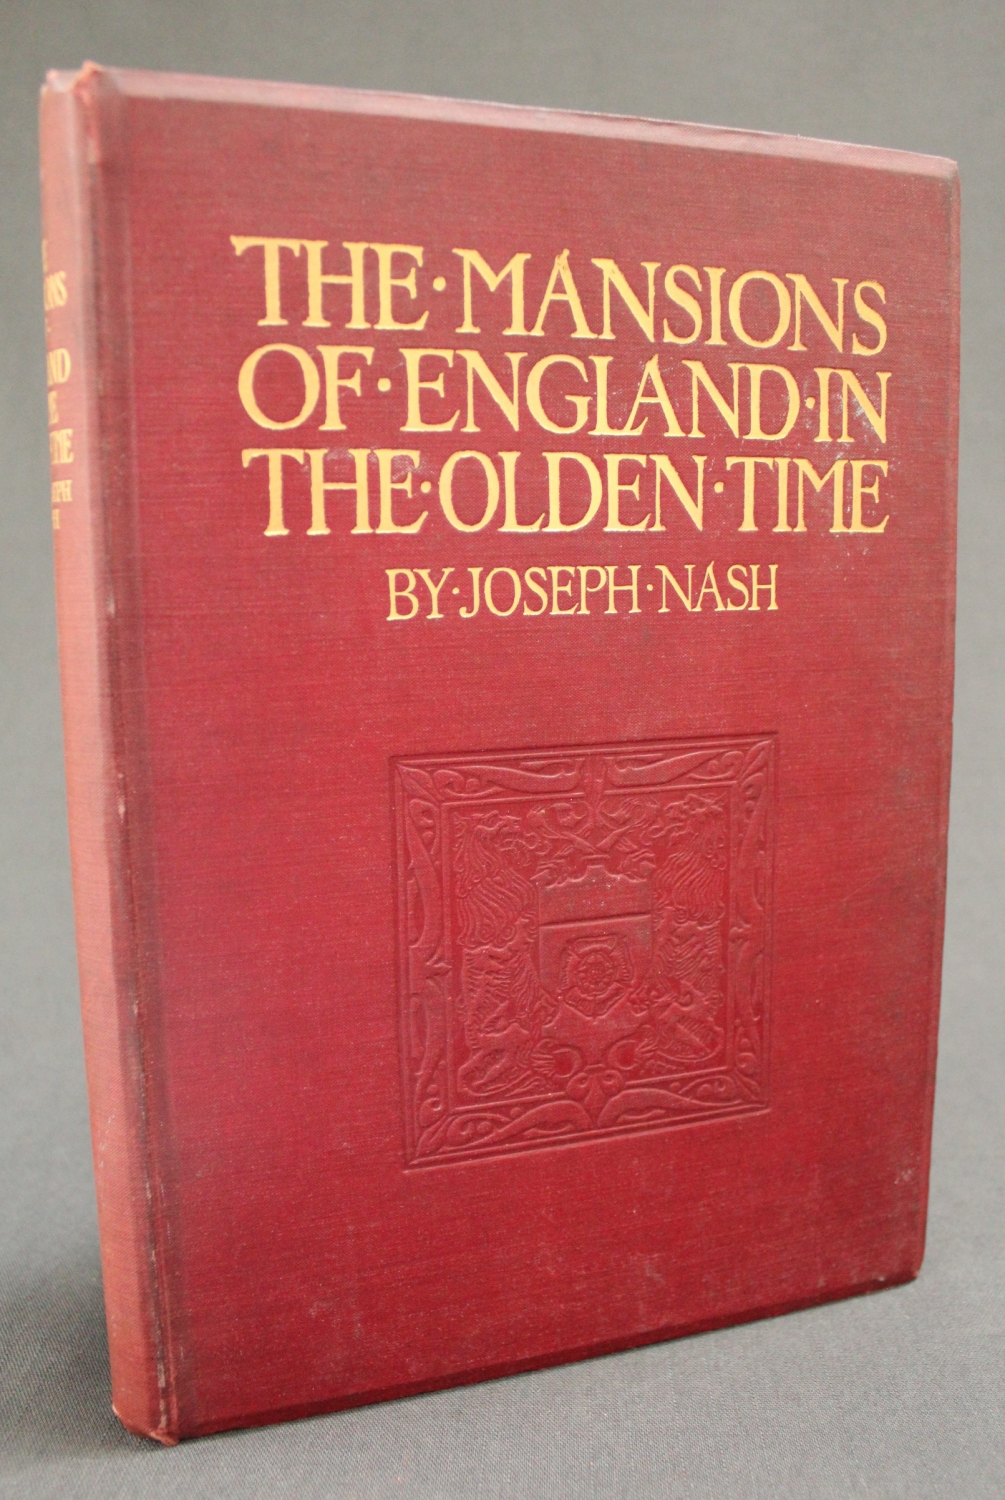 Joseph Nash